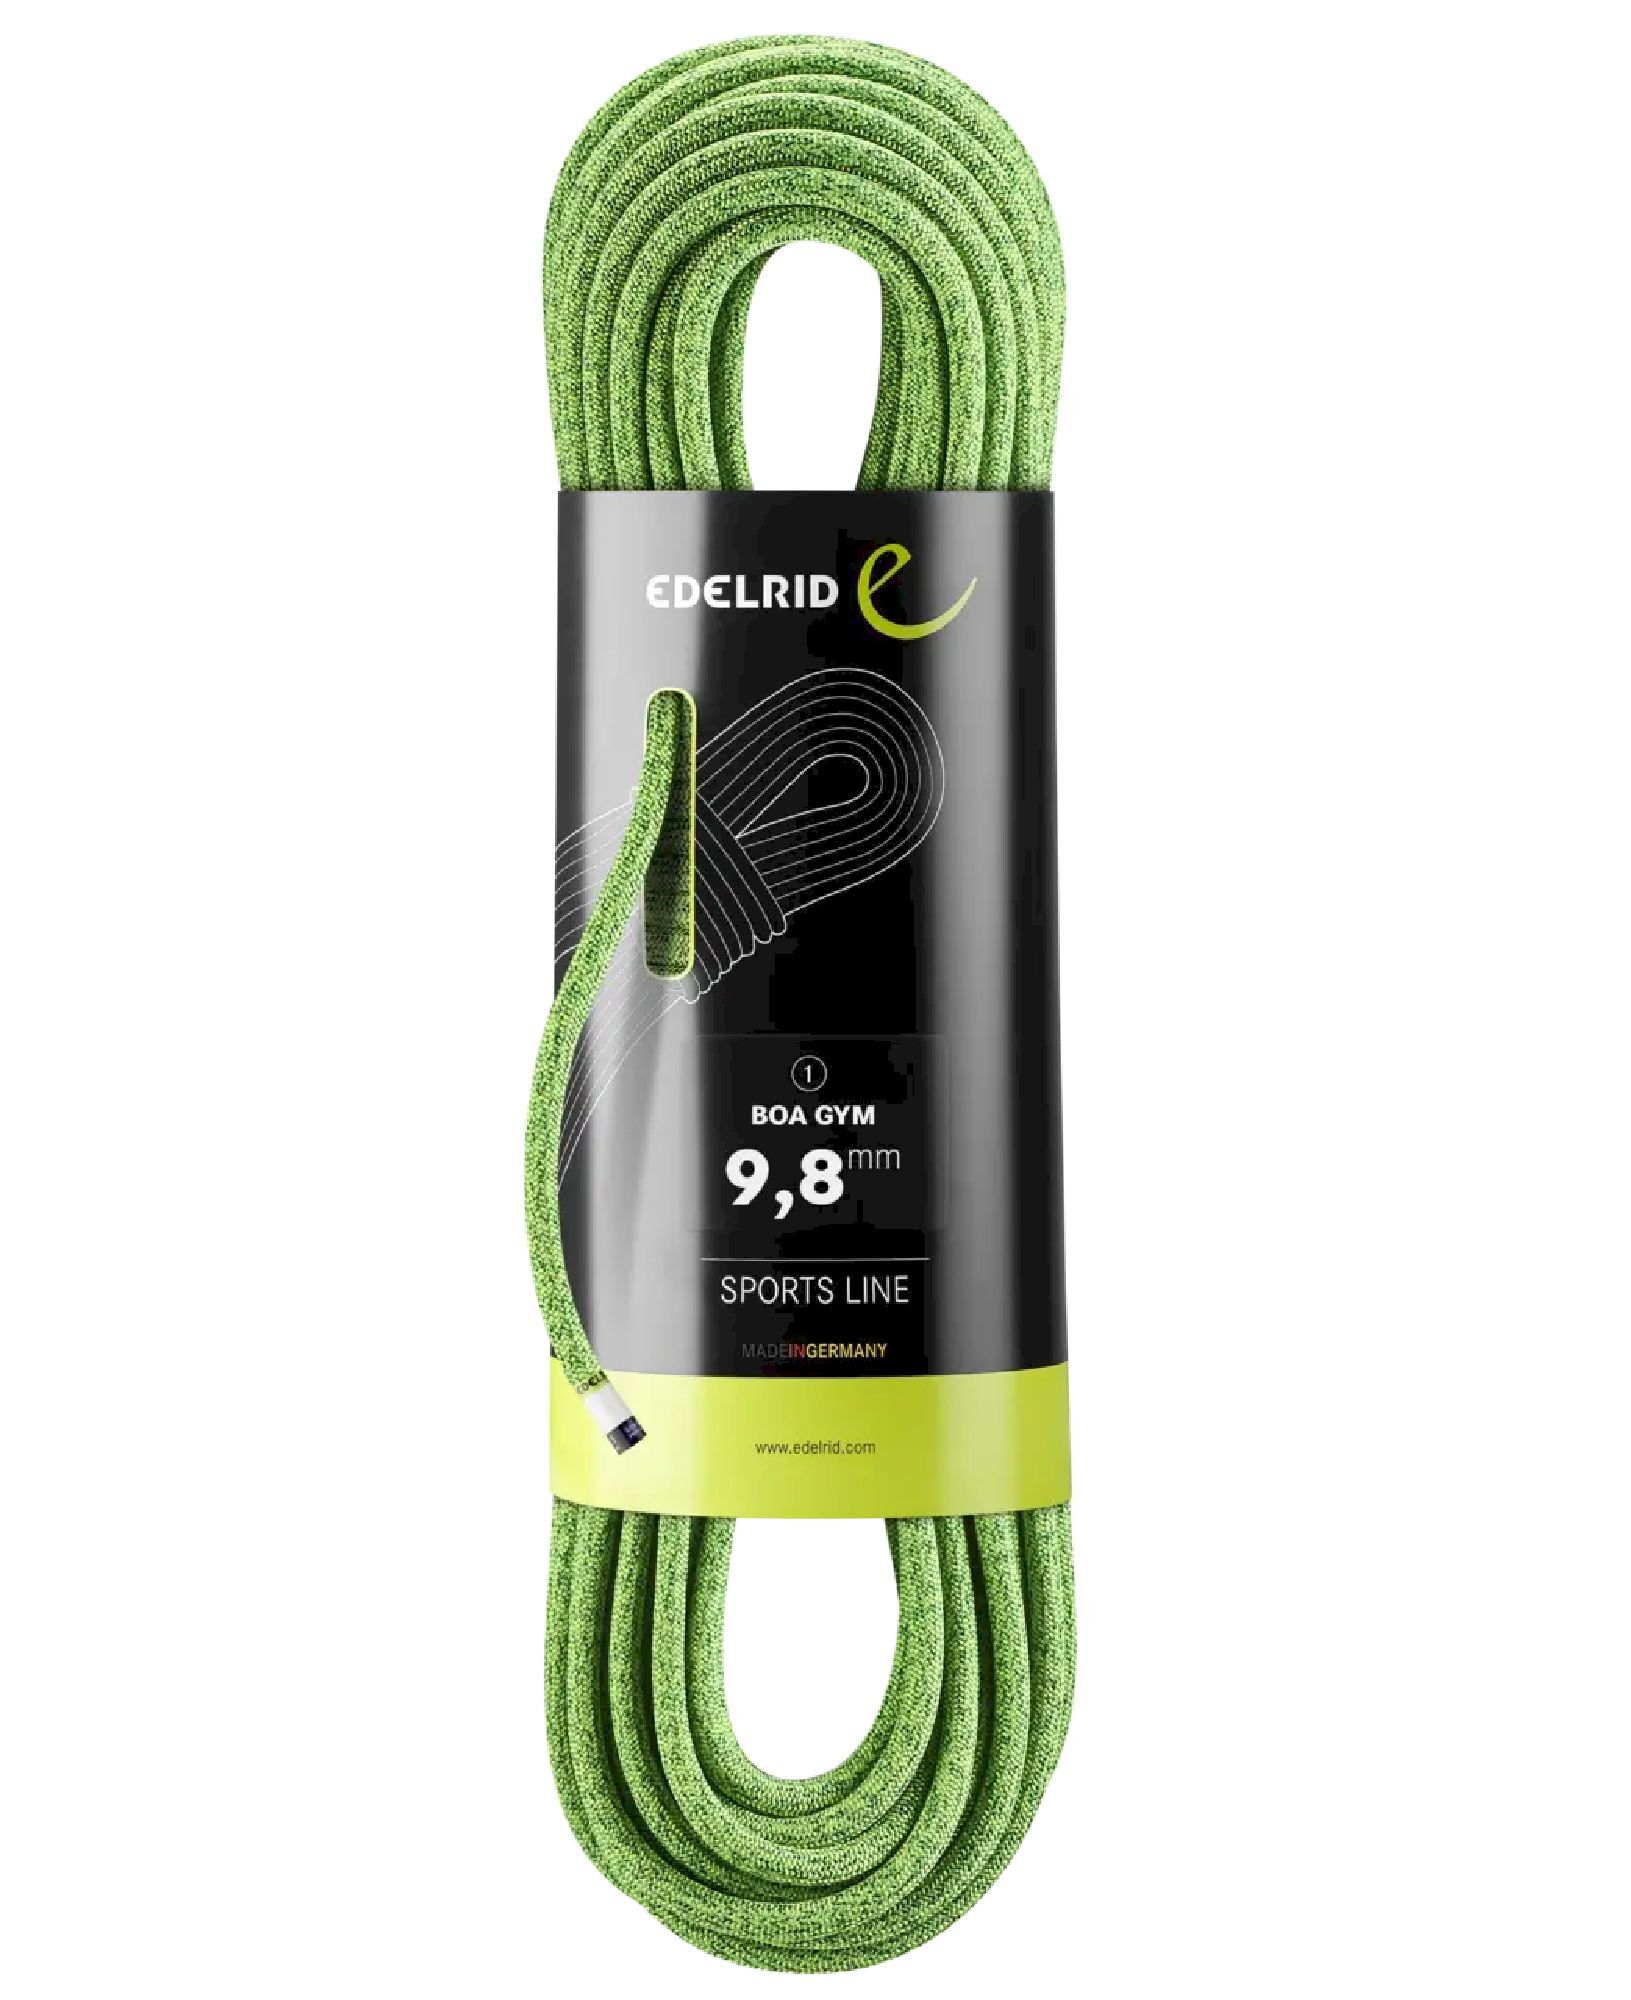 Edelrid Boa Gym 9,8mm - Jednoduché lano | Hardloop